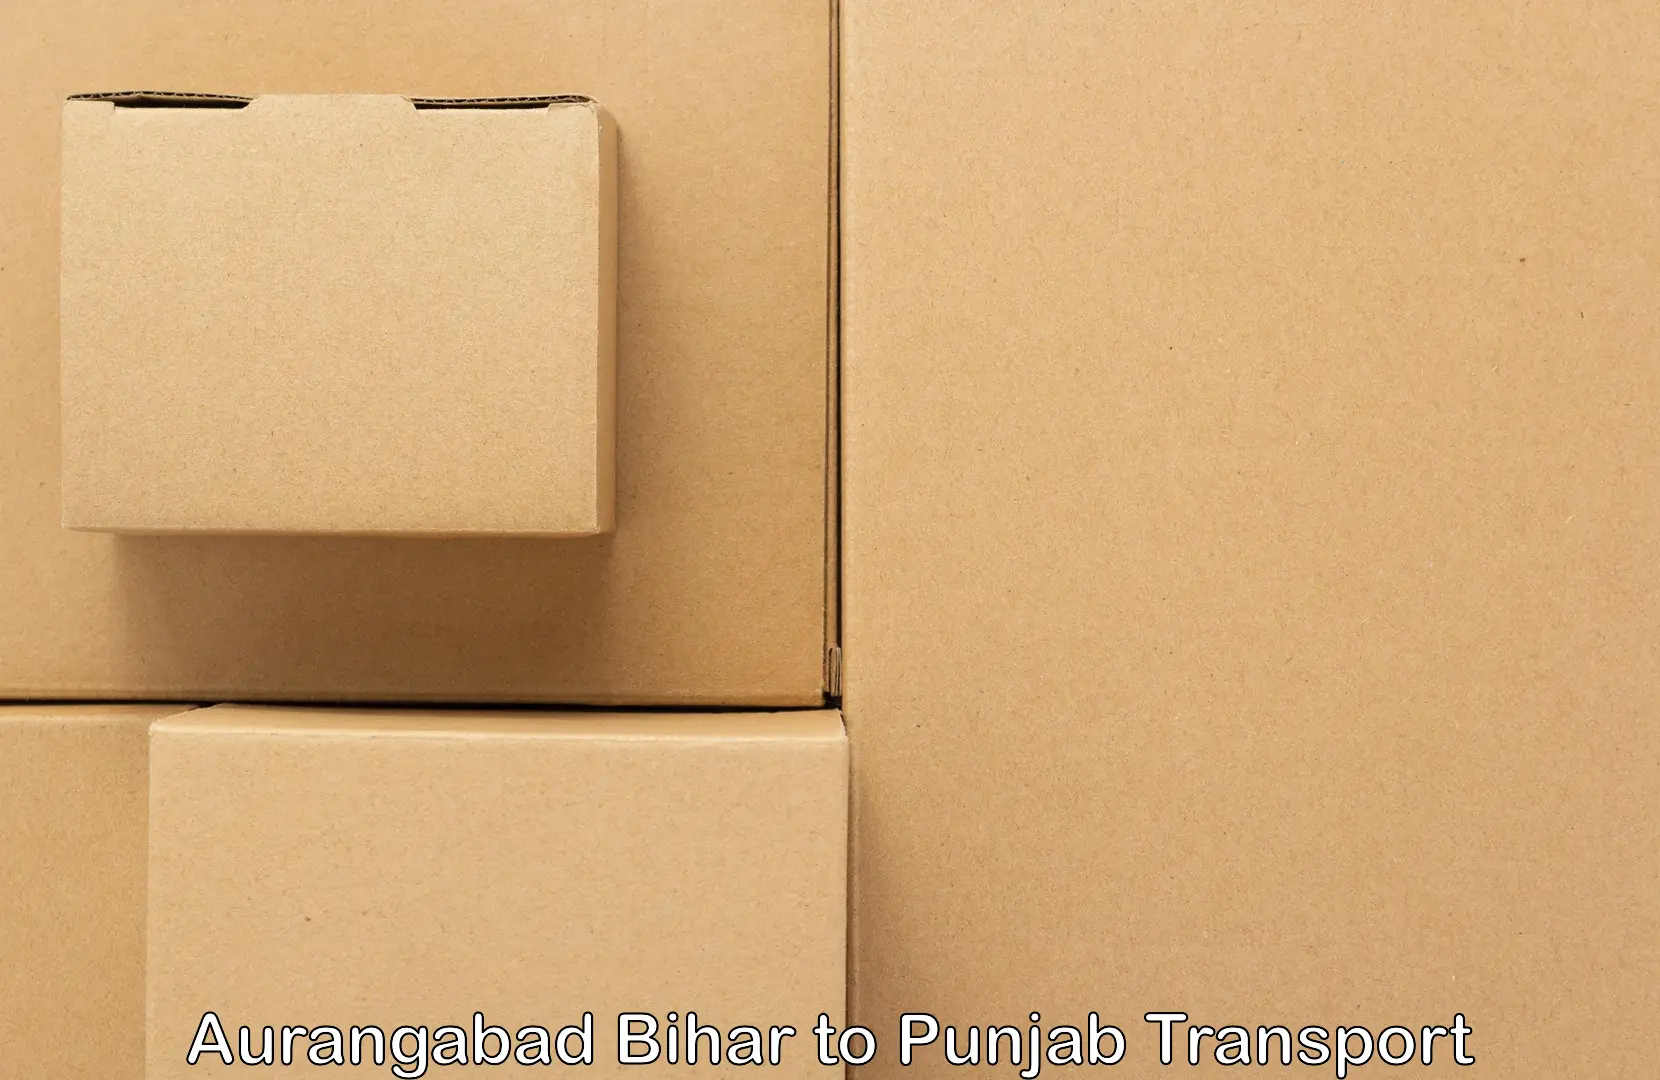 Cargo transport services Aurangabad Bihar to Zirakpur